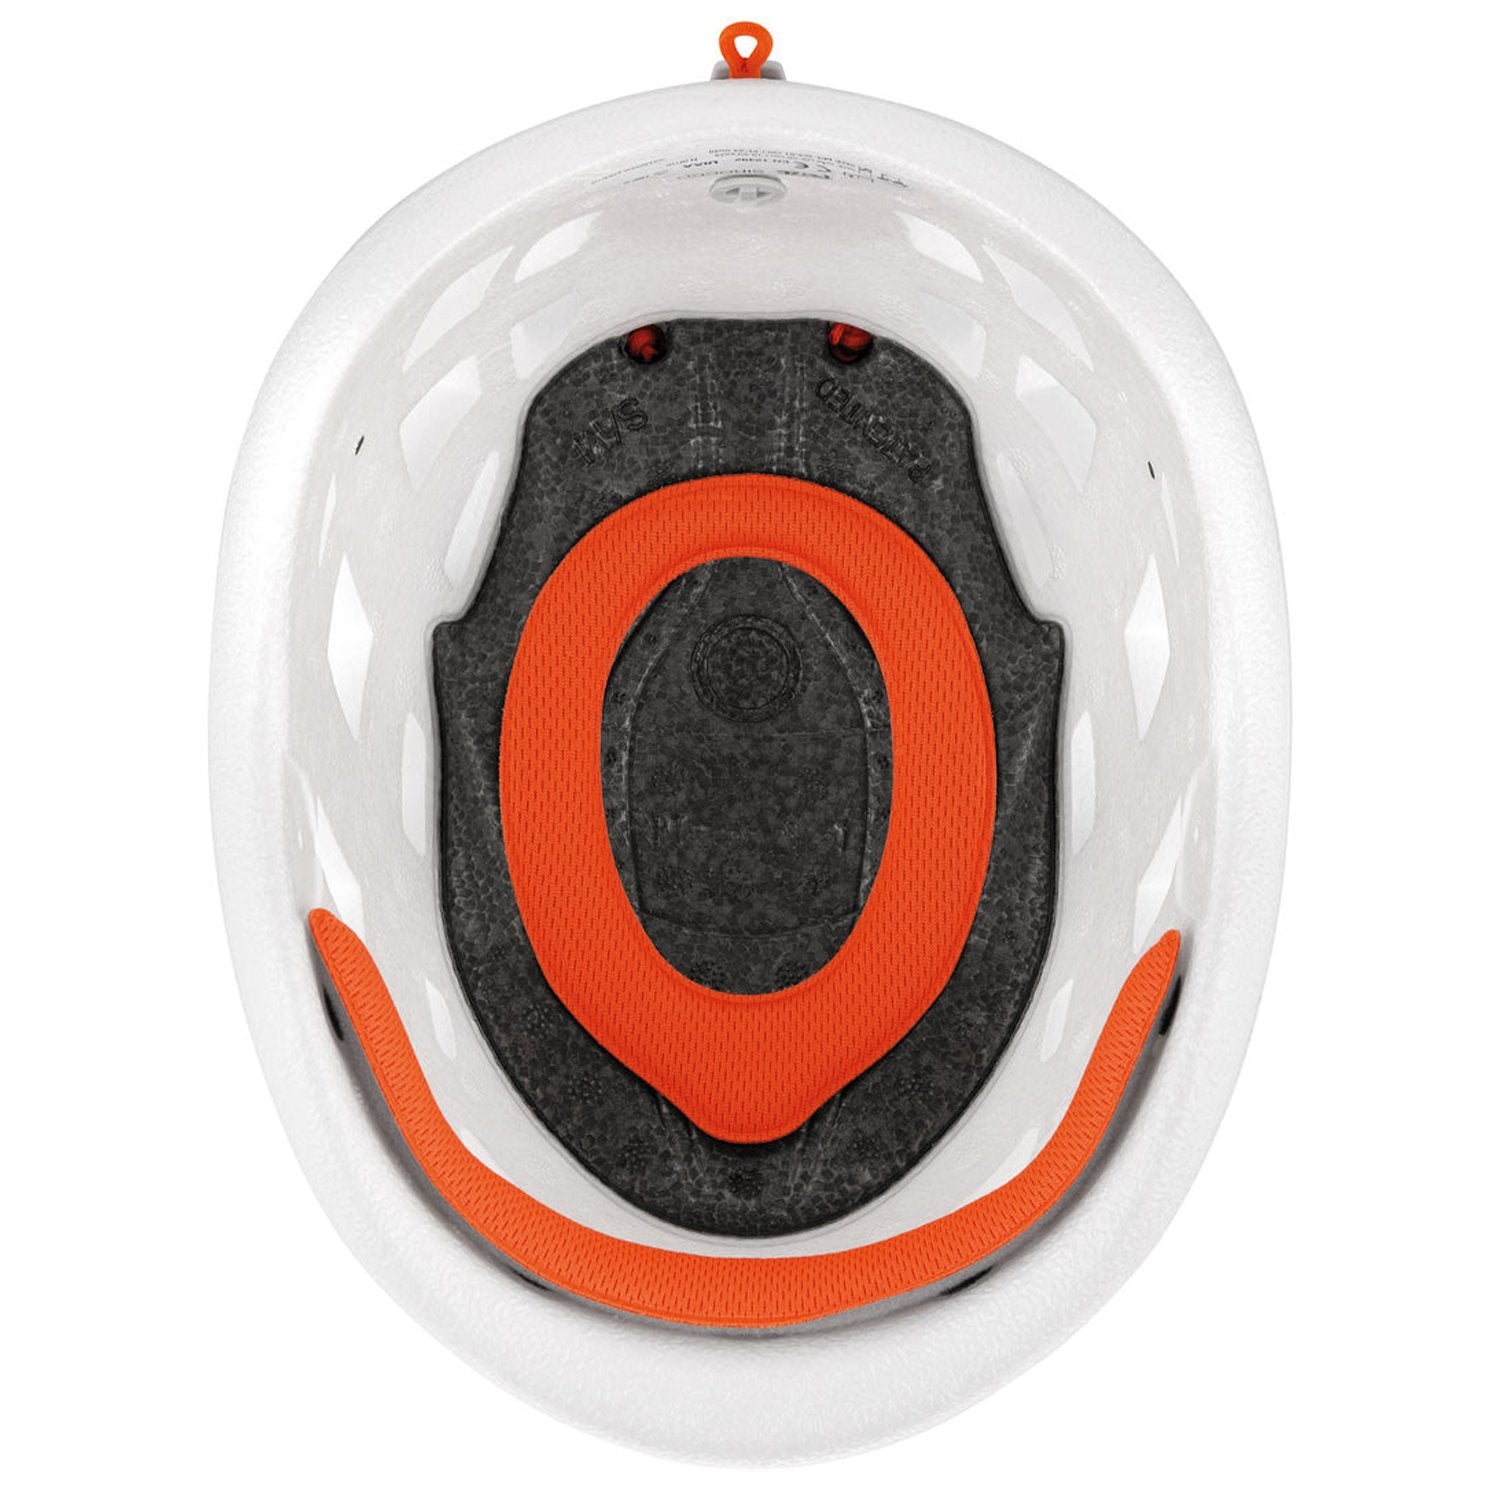 Buy Gokyo Petzl Sirocco Helmet | Helmet at Gokyo Outdoor Clothing & Gear